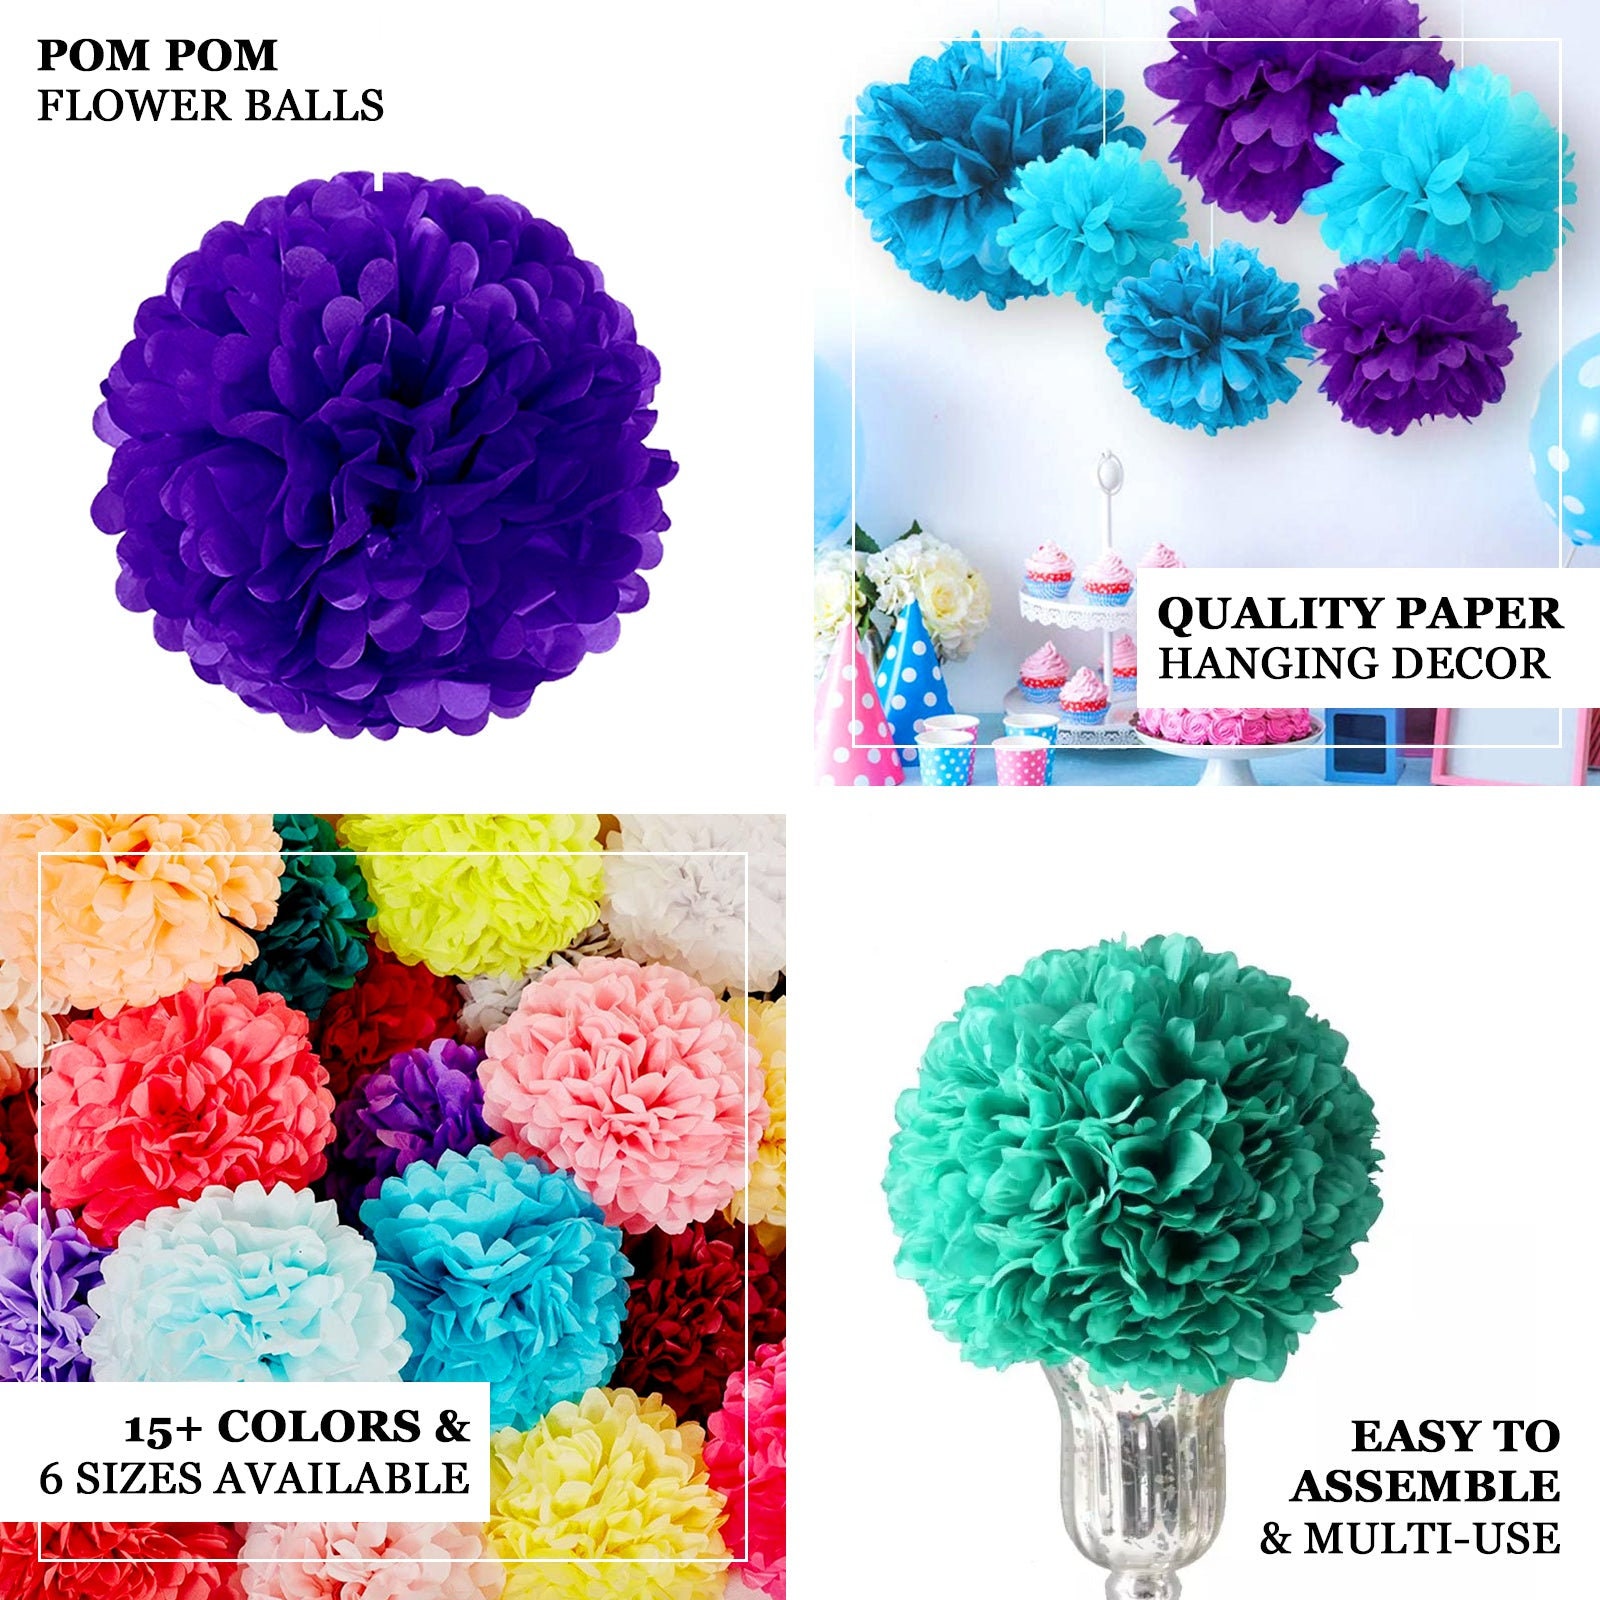 Silver Paper Tissue Fluffy Pom Pom Flower Balls - 16